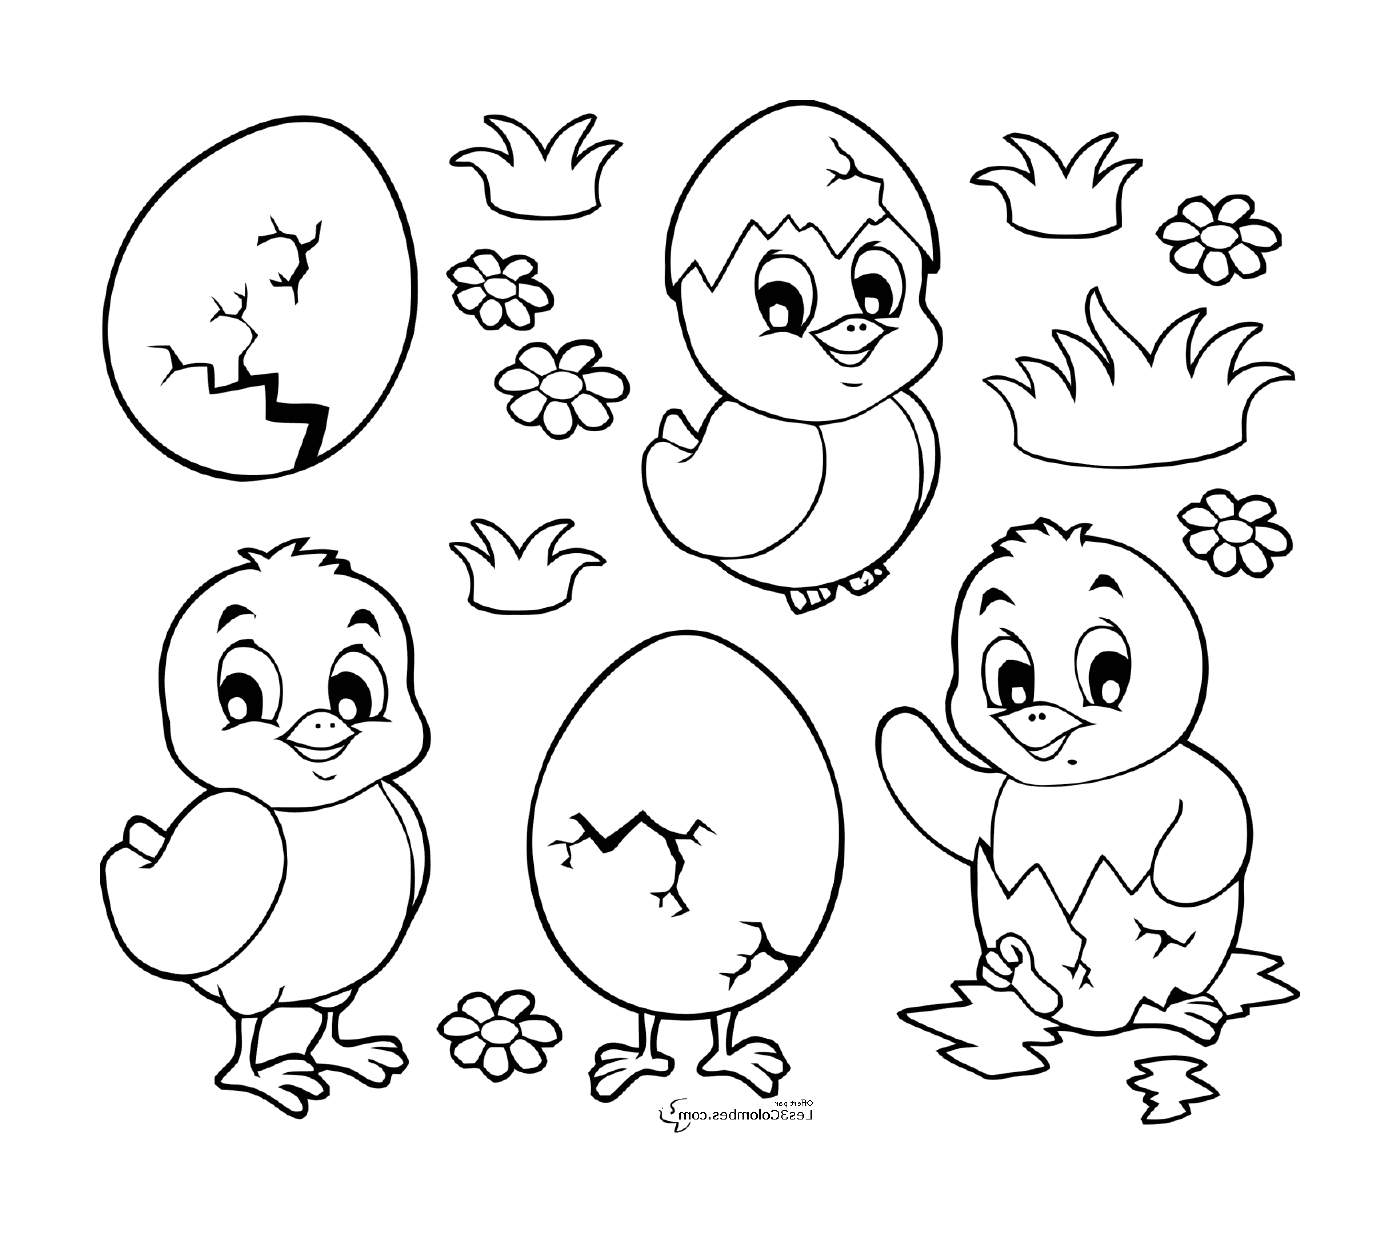  Un grupo de polluelos y un huevo de Pascua 